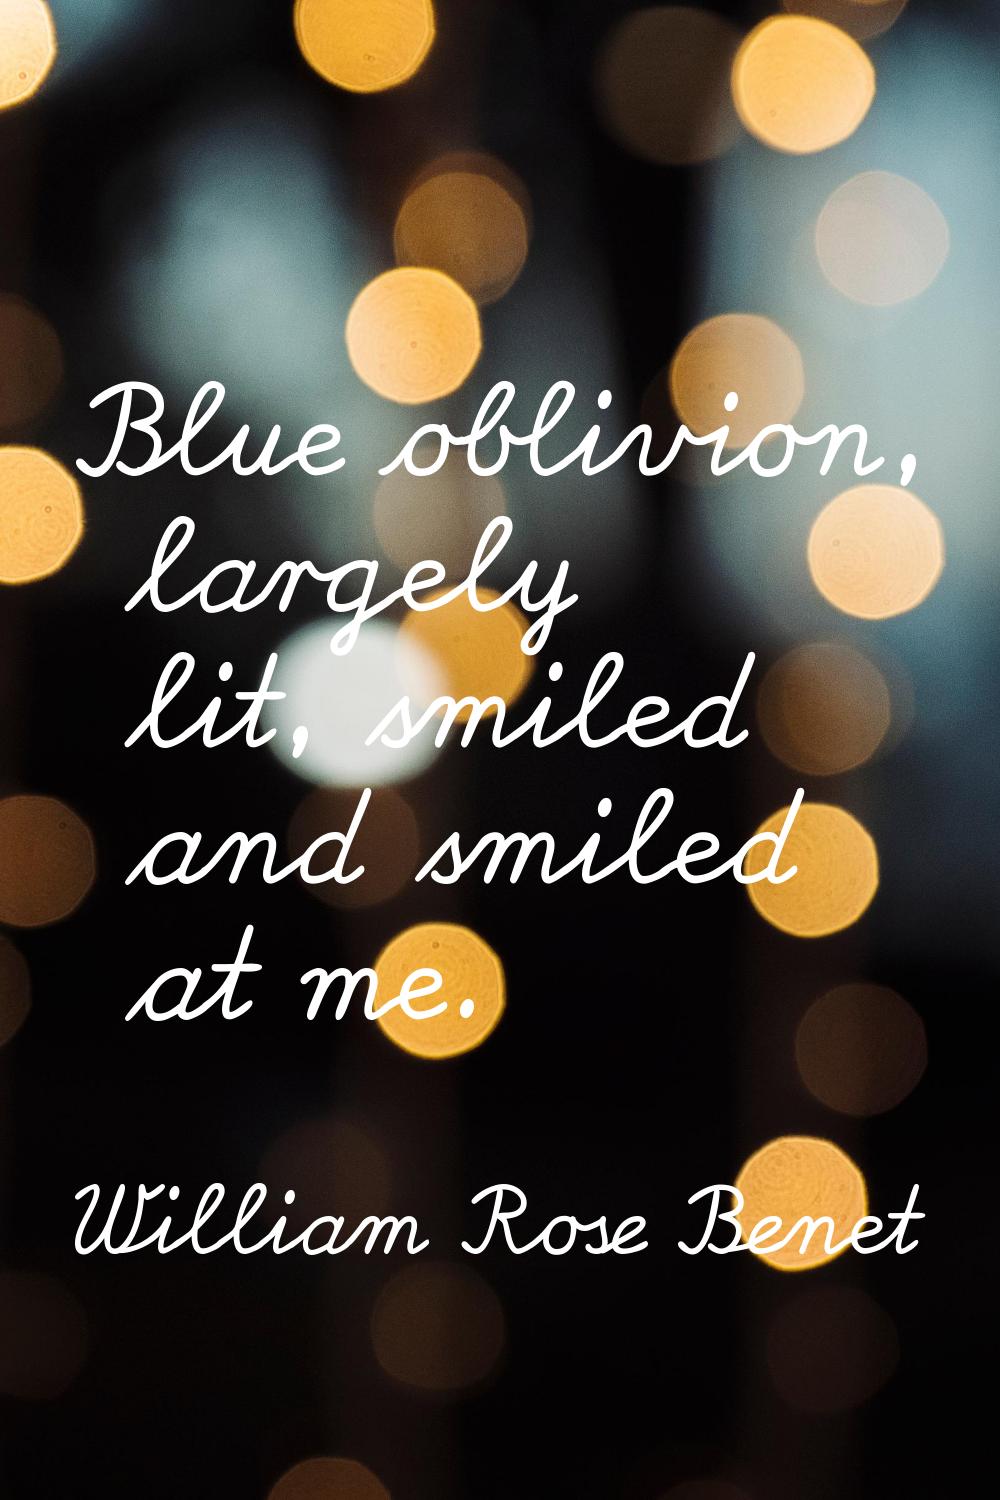 Blue oblivion, largely lit, smiled and smiled at me.